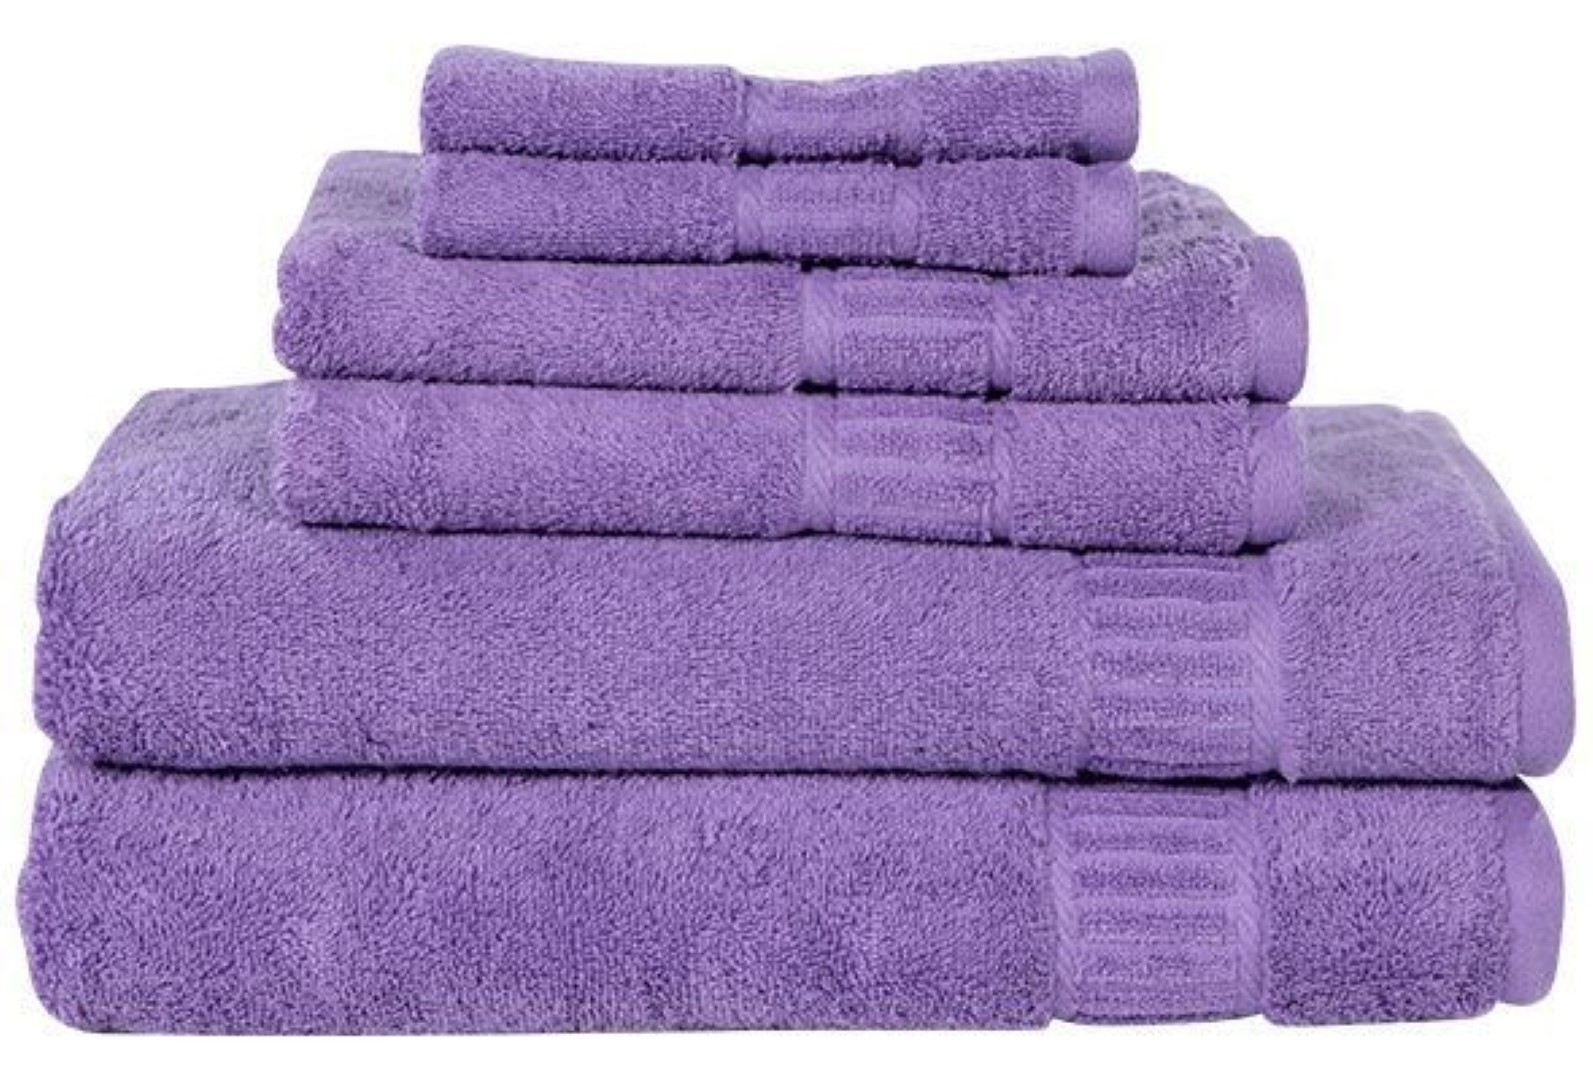 MyPillow Bath Towels